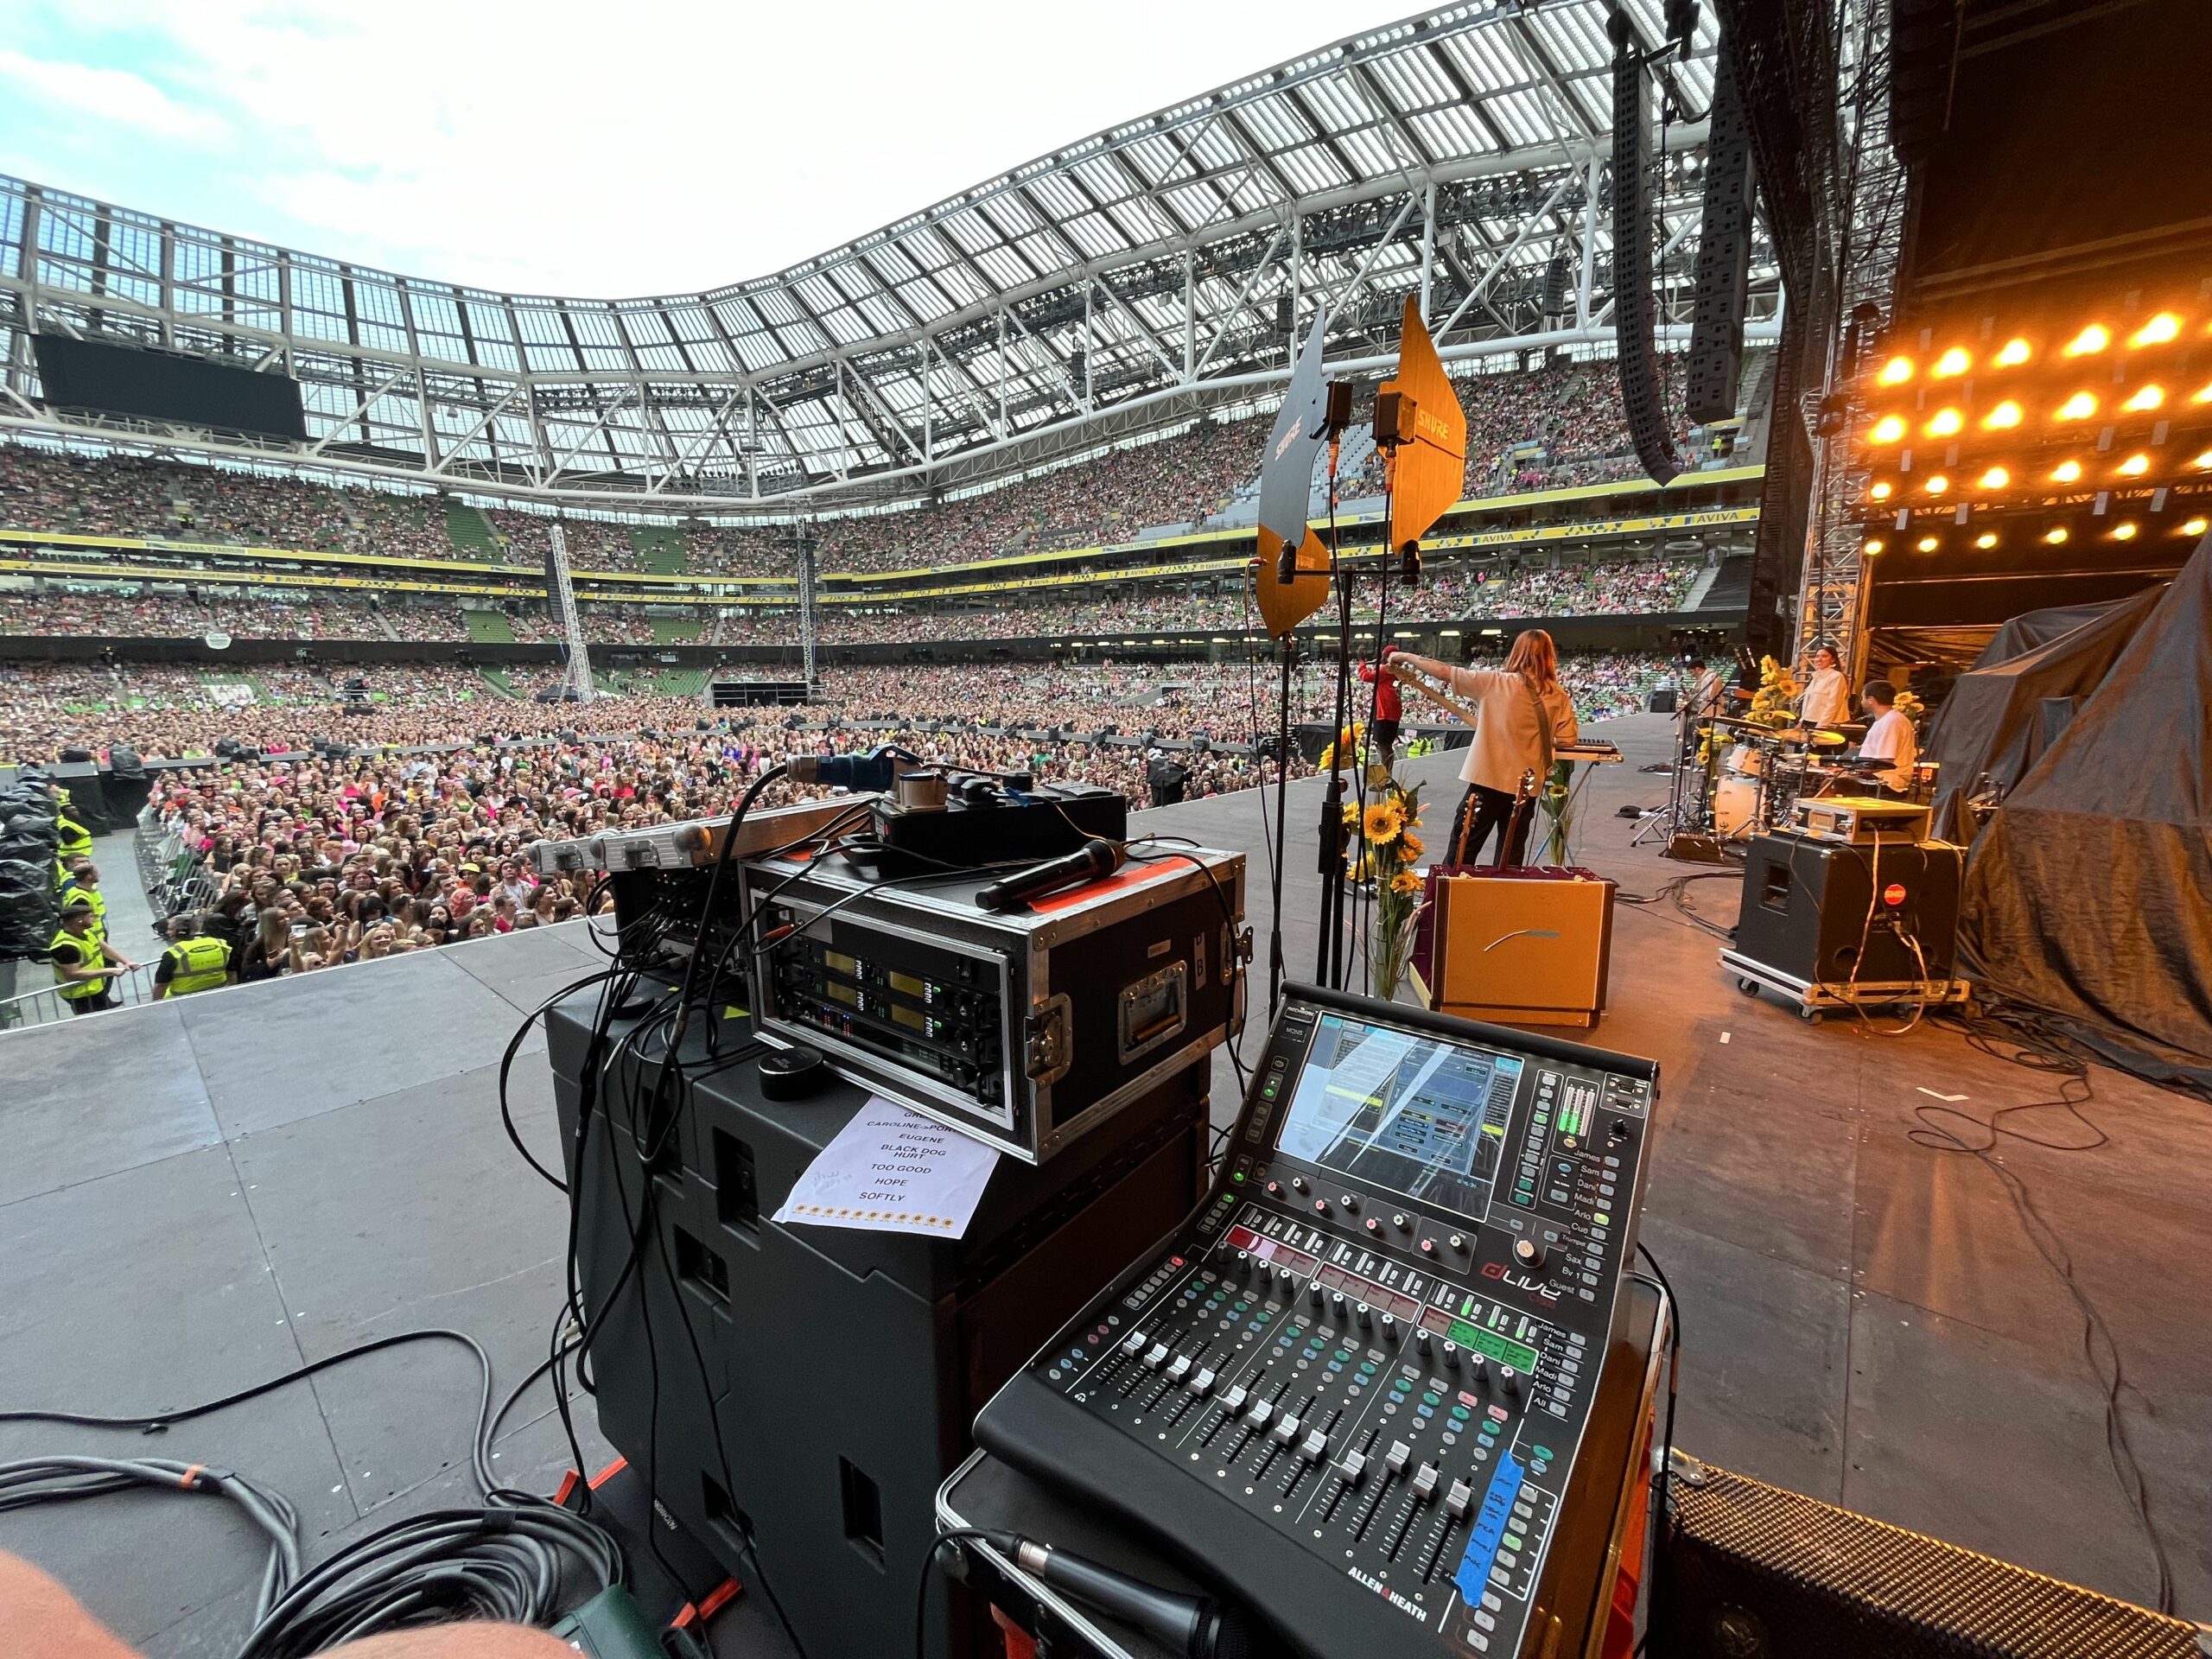 dLive C1500 onstage at Dublin Stadium